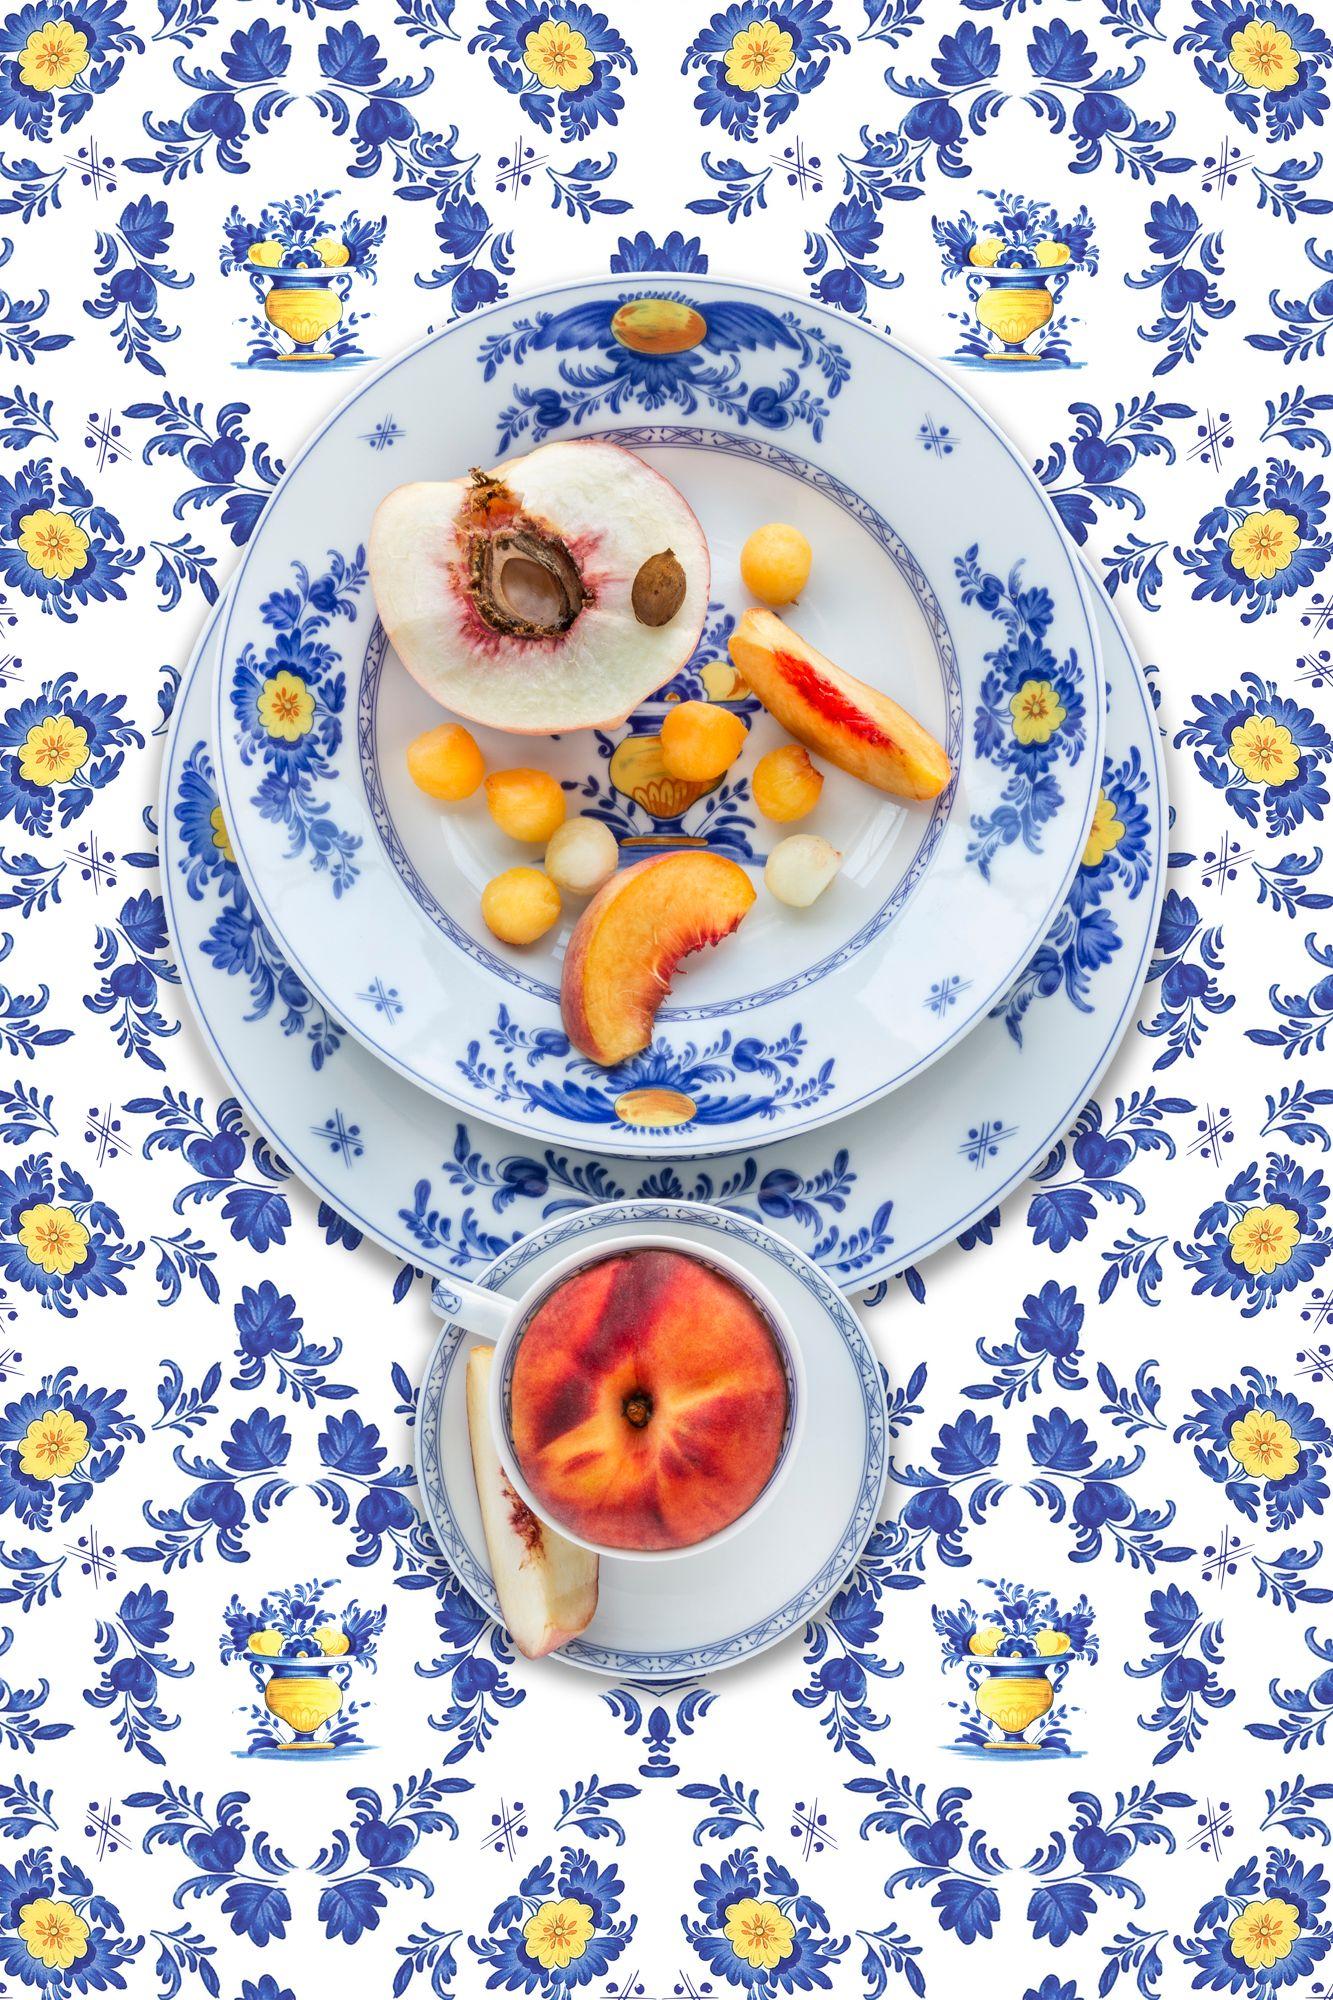 JP Terlizzi Color Photograph - Vista Alegre Viana with Peach - Blue, white, yellow floral peach food still life